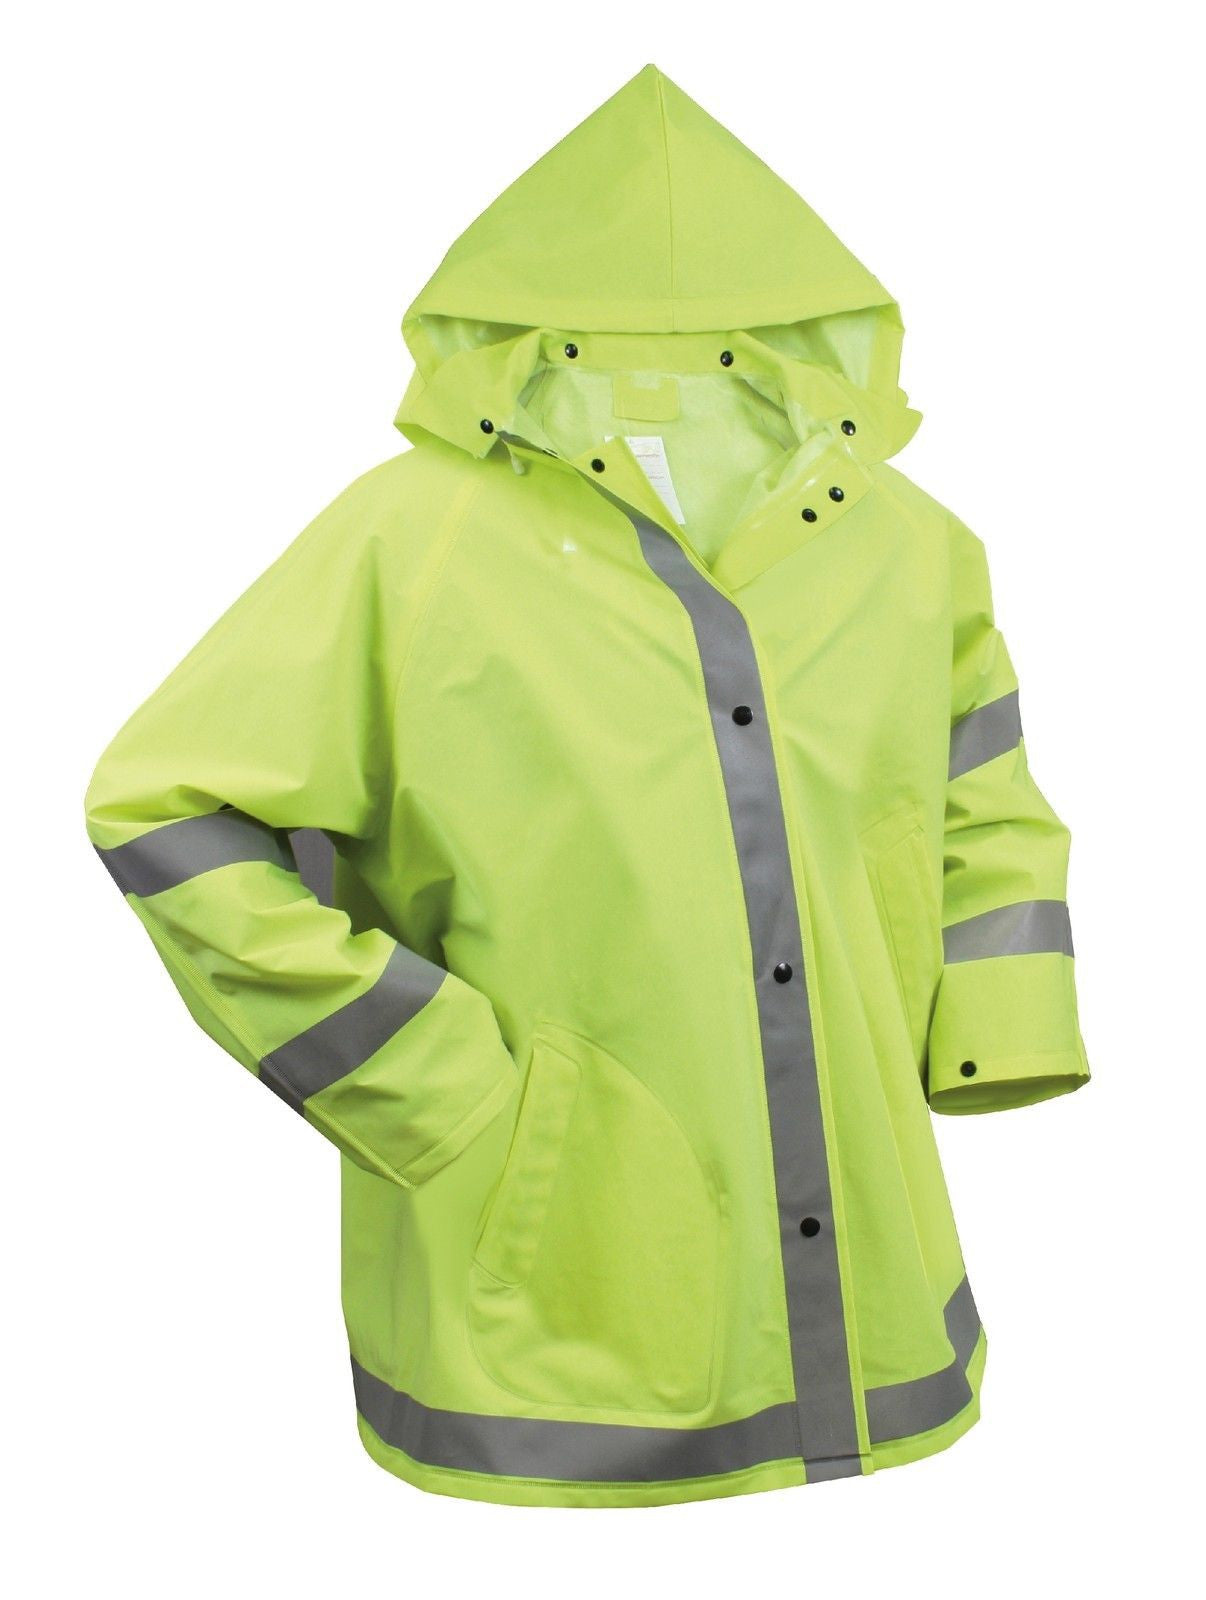 Safety Rain Jacket Reflective Green Hi-Vis Raincoat Rainjacket w